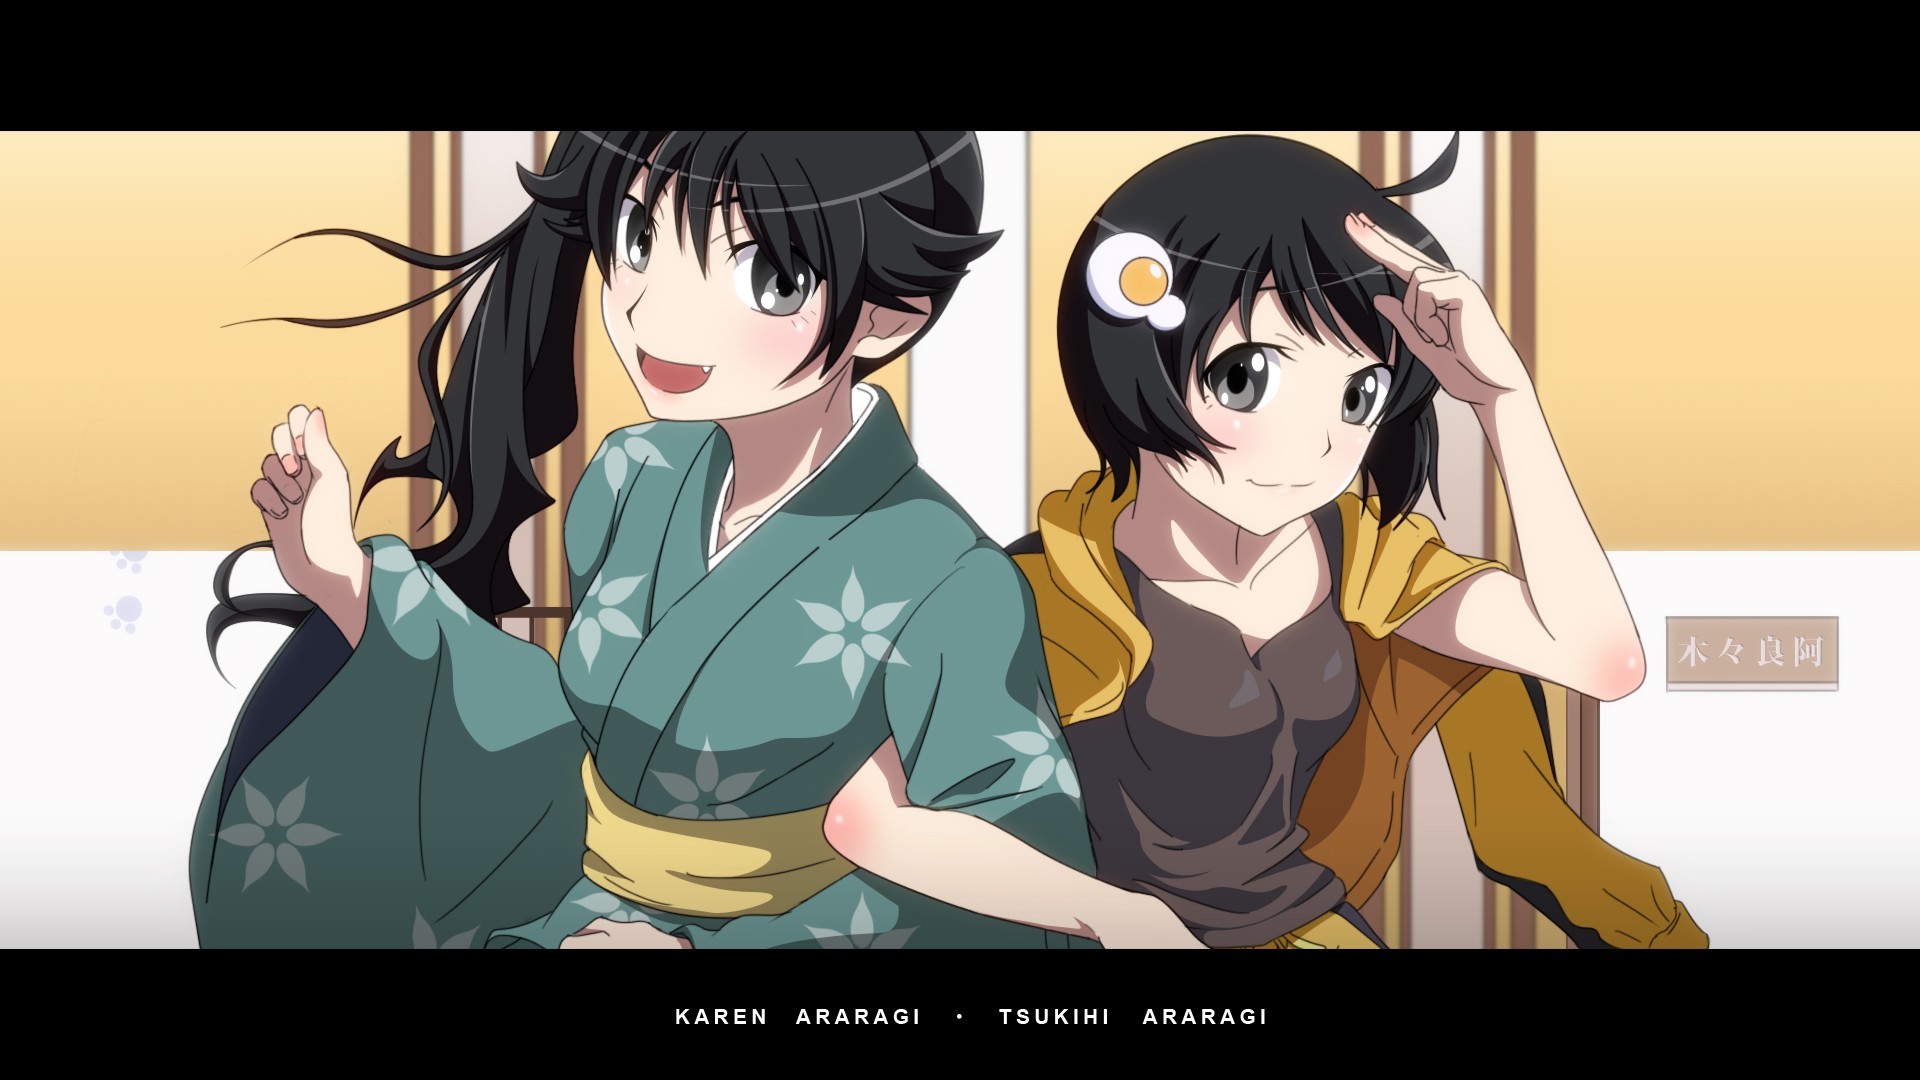 Anime 1920x1080 Araragi Karen Araragi Tsukihi Monogatari Series anime girls